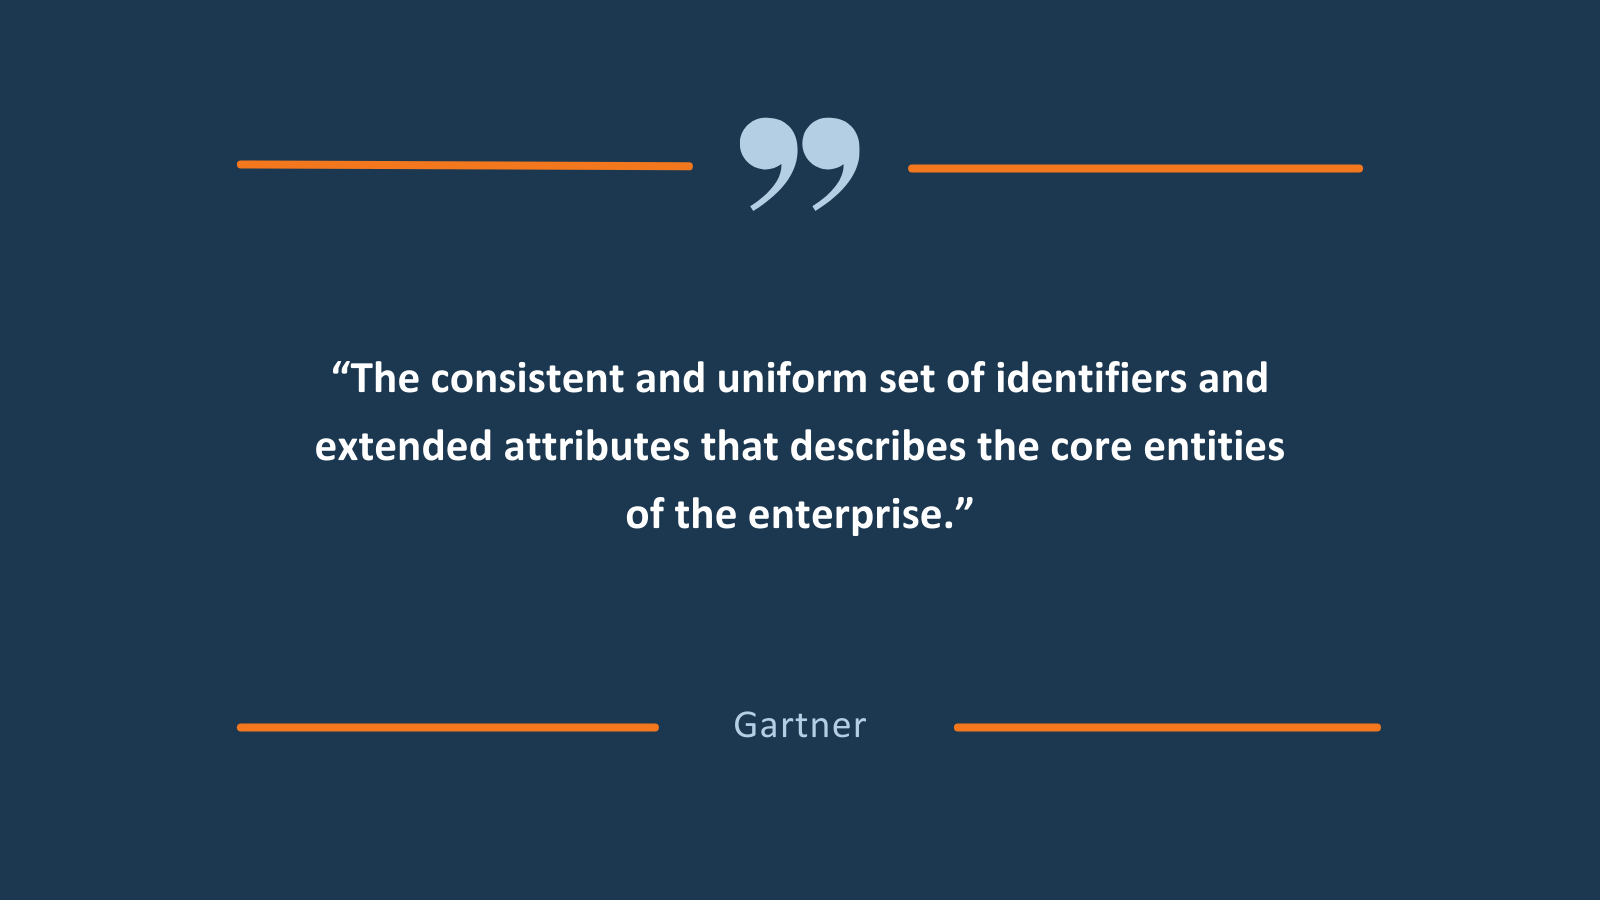 Quote from Gartner describing what master data is